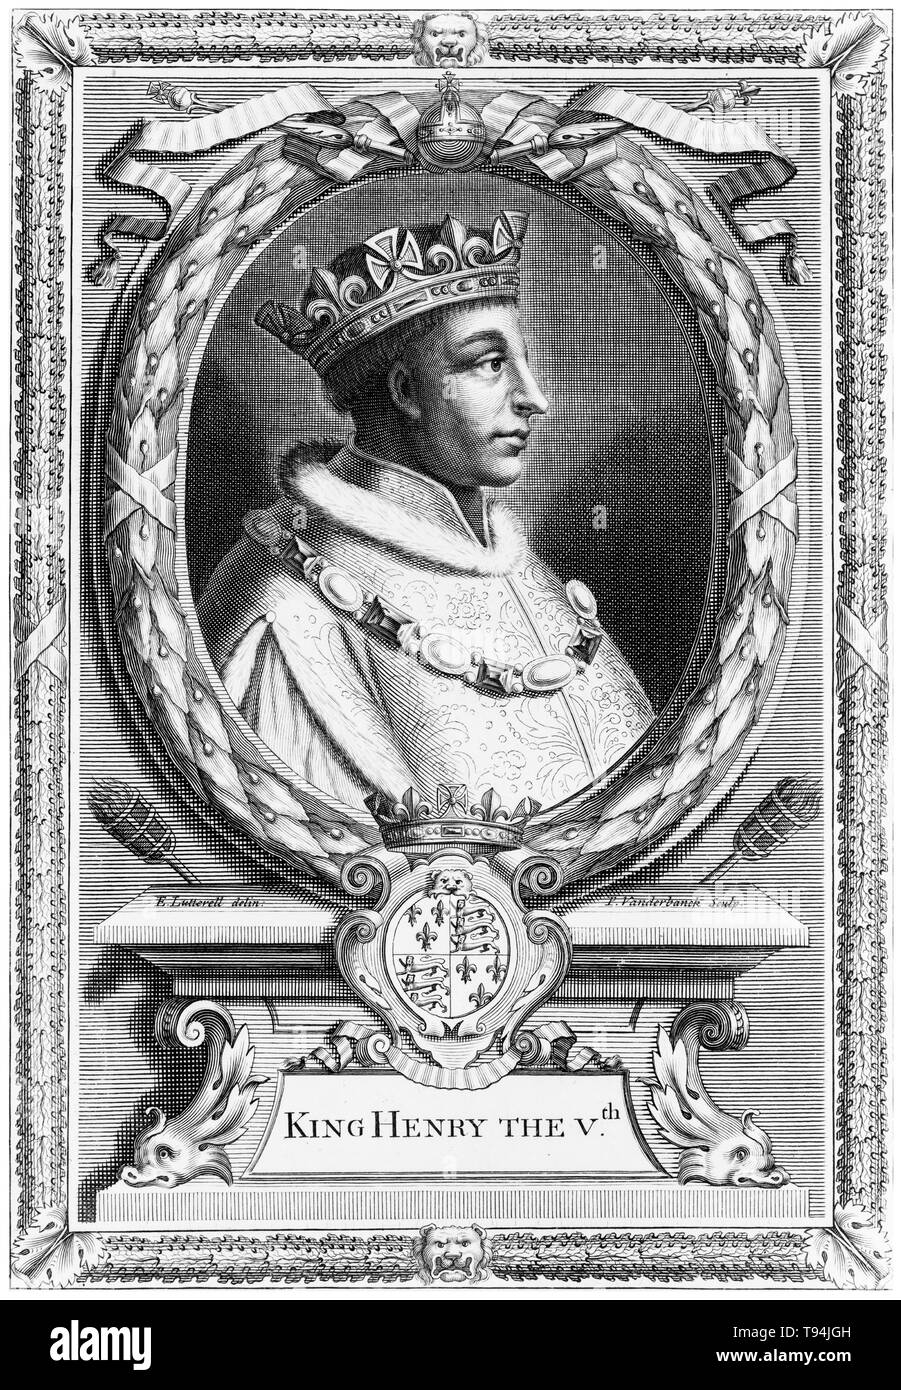 King Henry V, portrait engraving in profile, 1700s Stock Photo